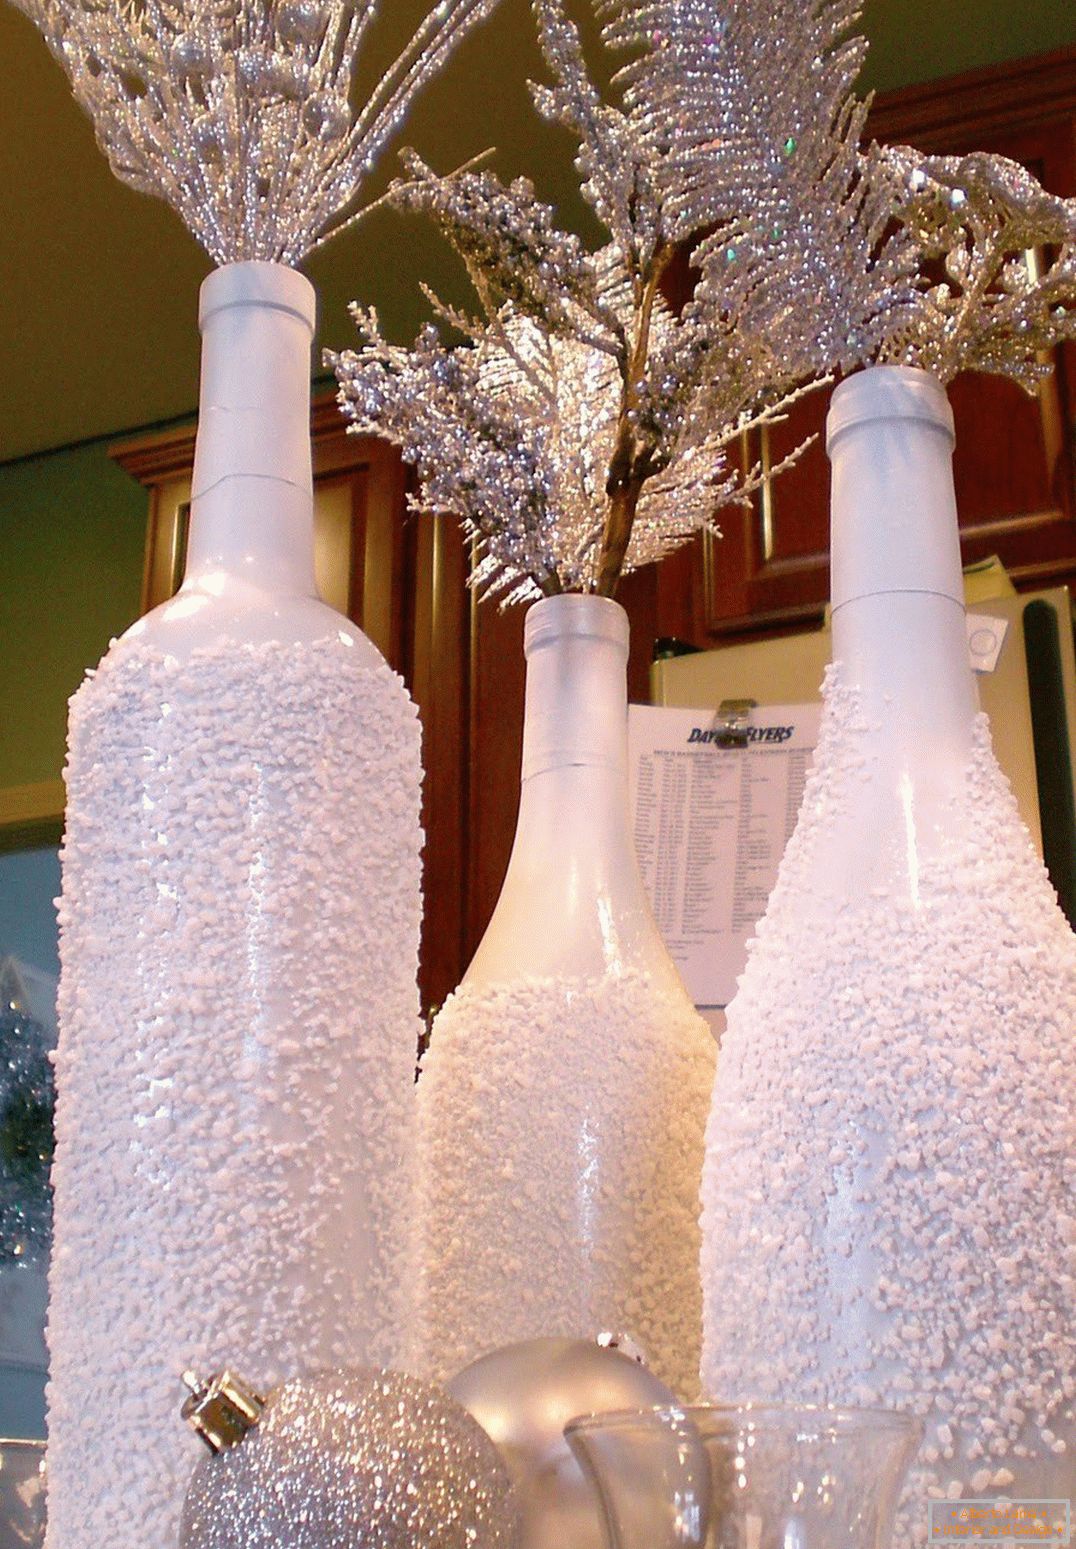 Christmas decoration of bottles